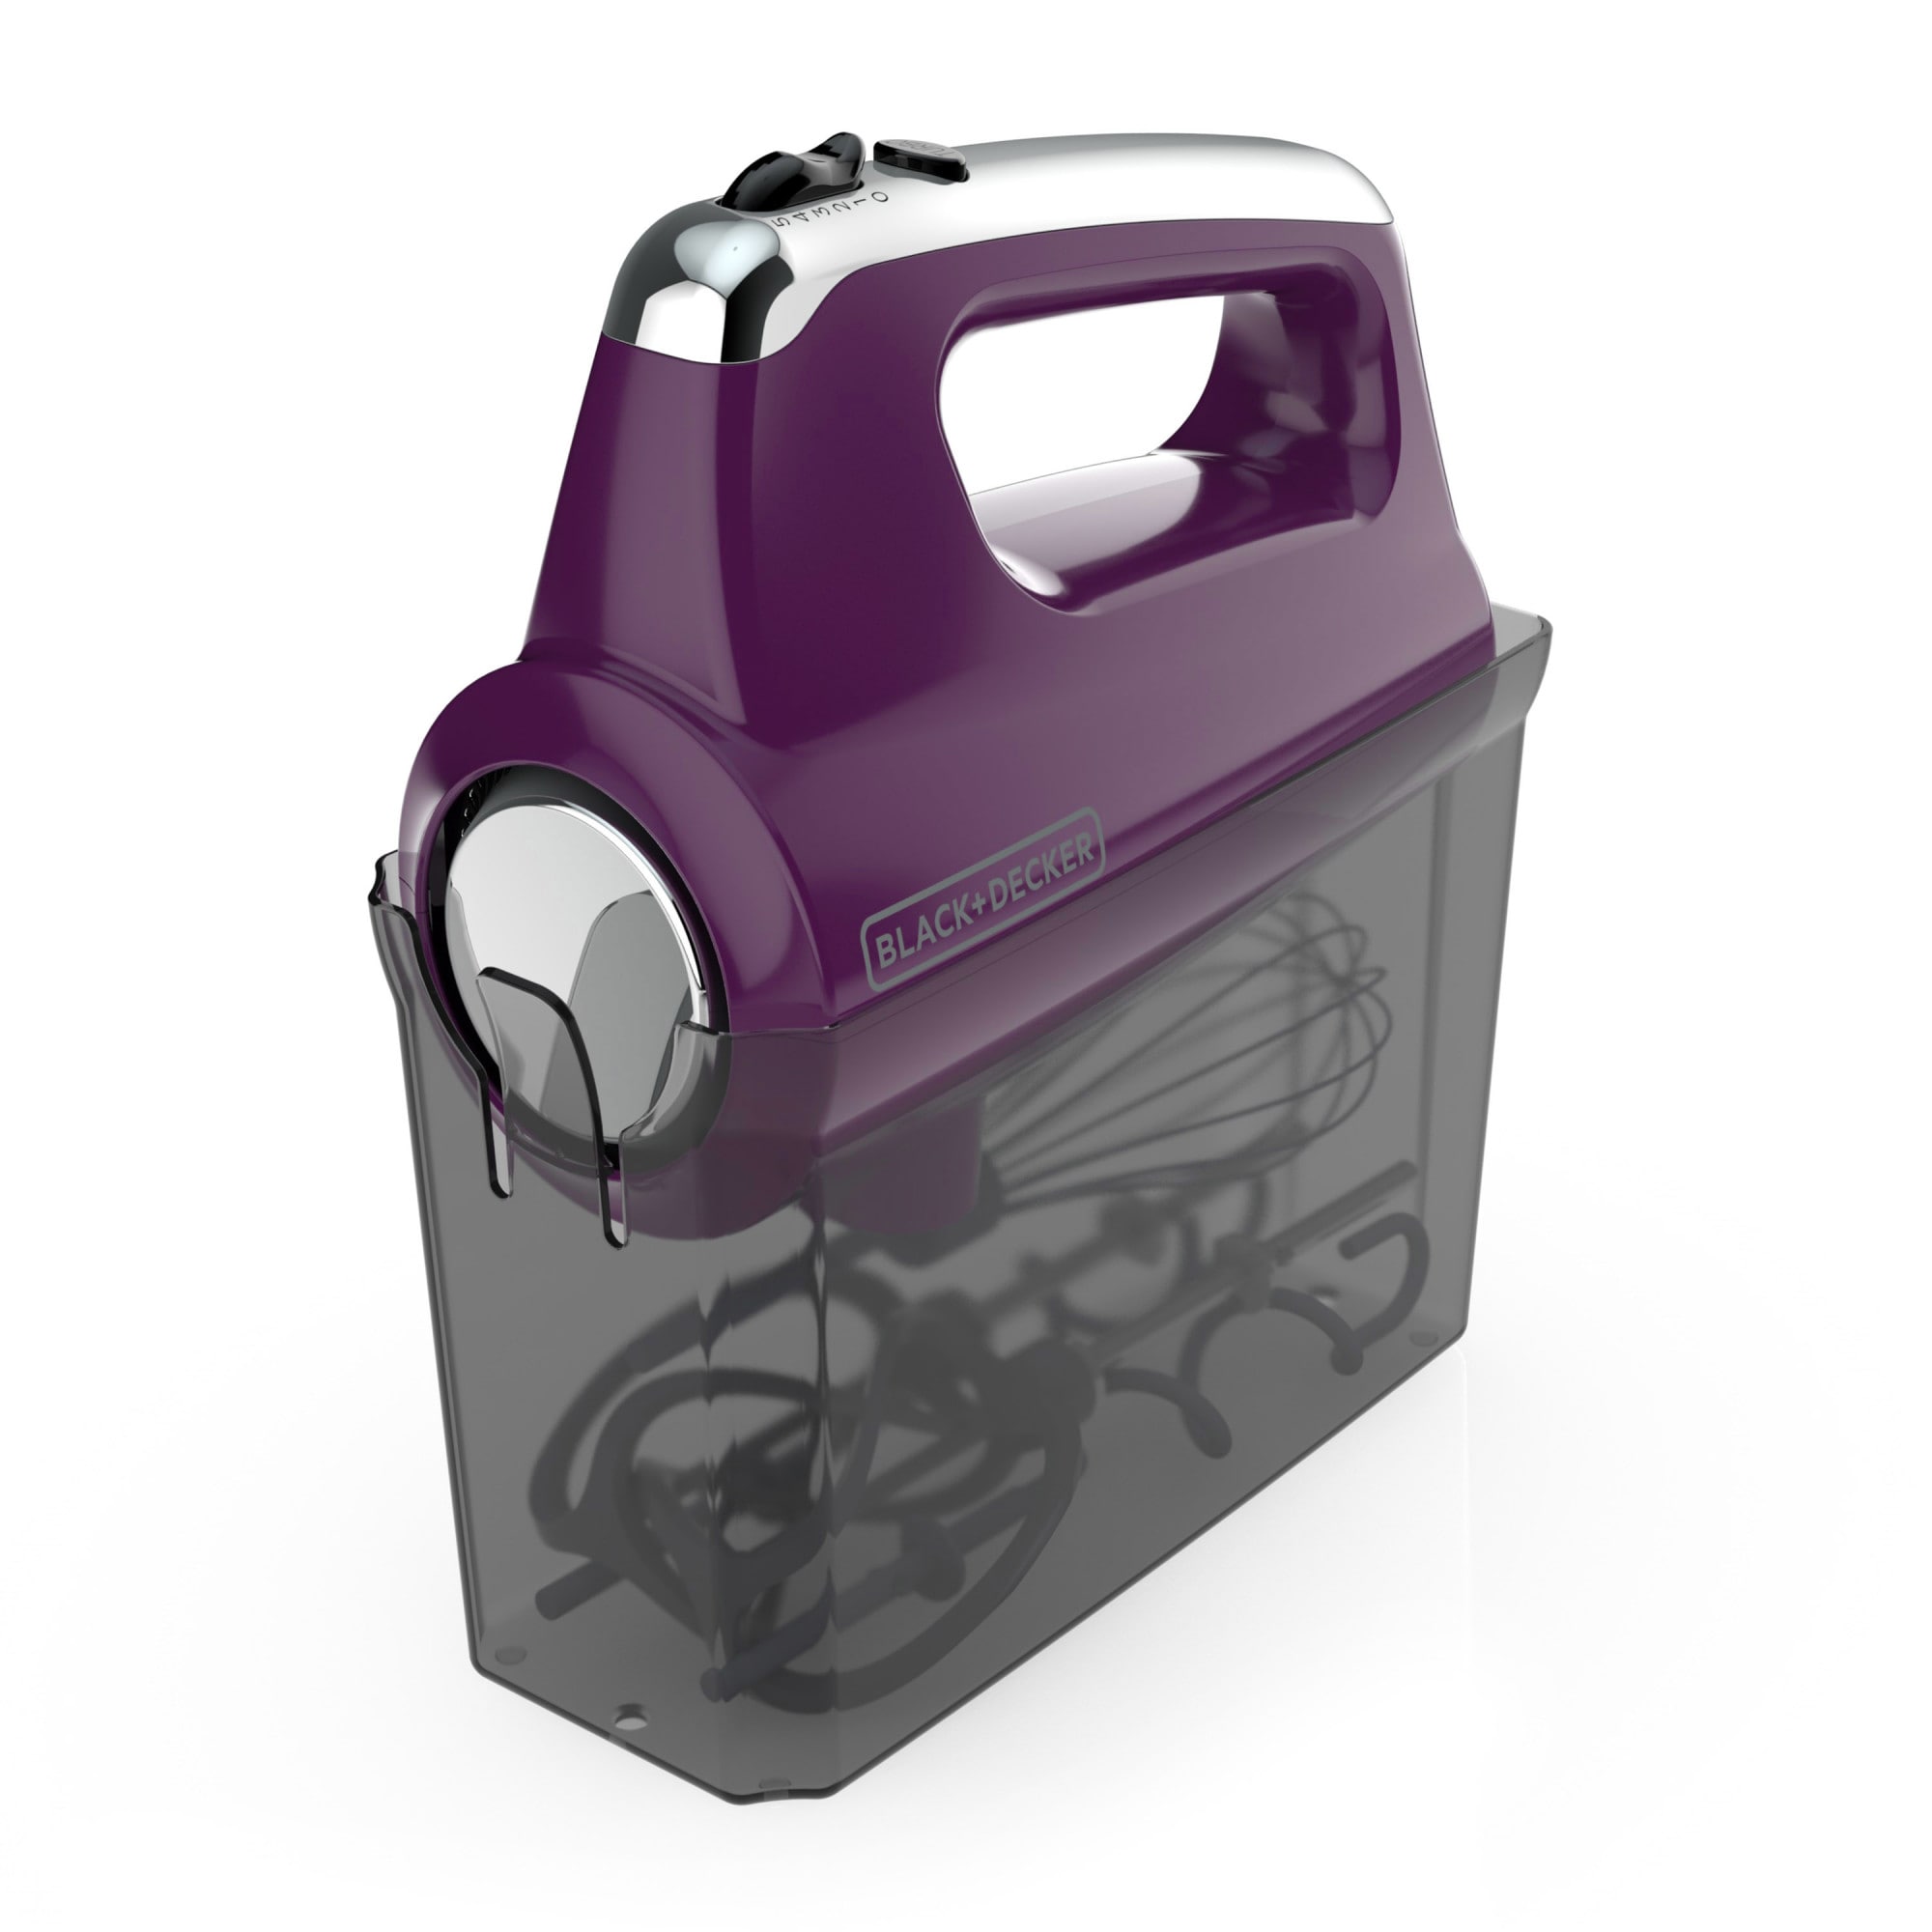 Black & Decker Helix Performance Premium 5-Speed Hand Mixer, Purple